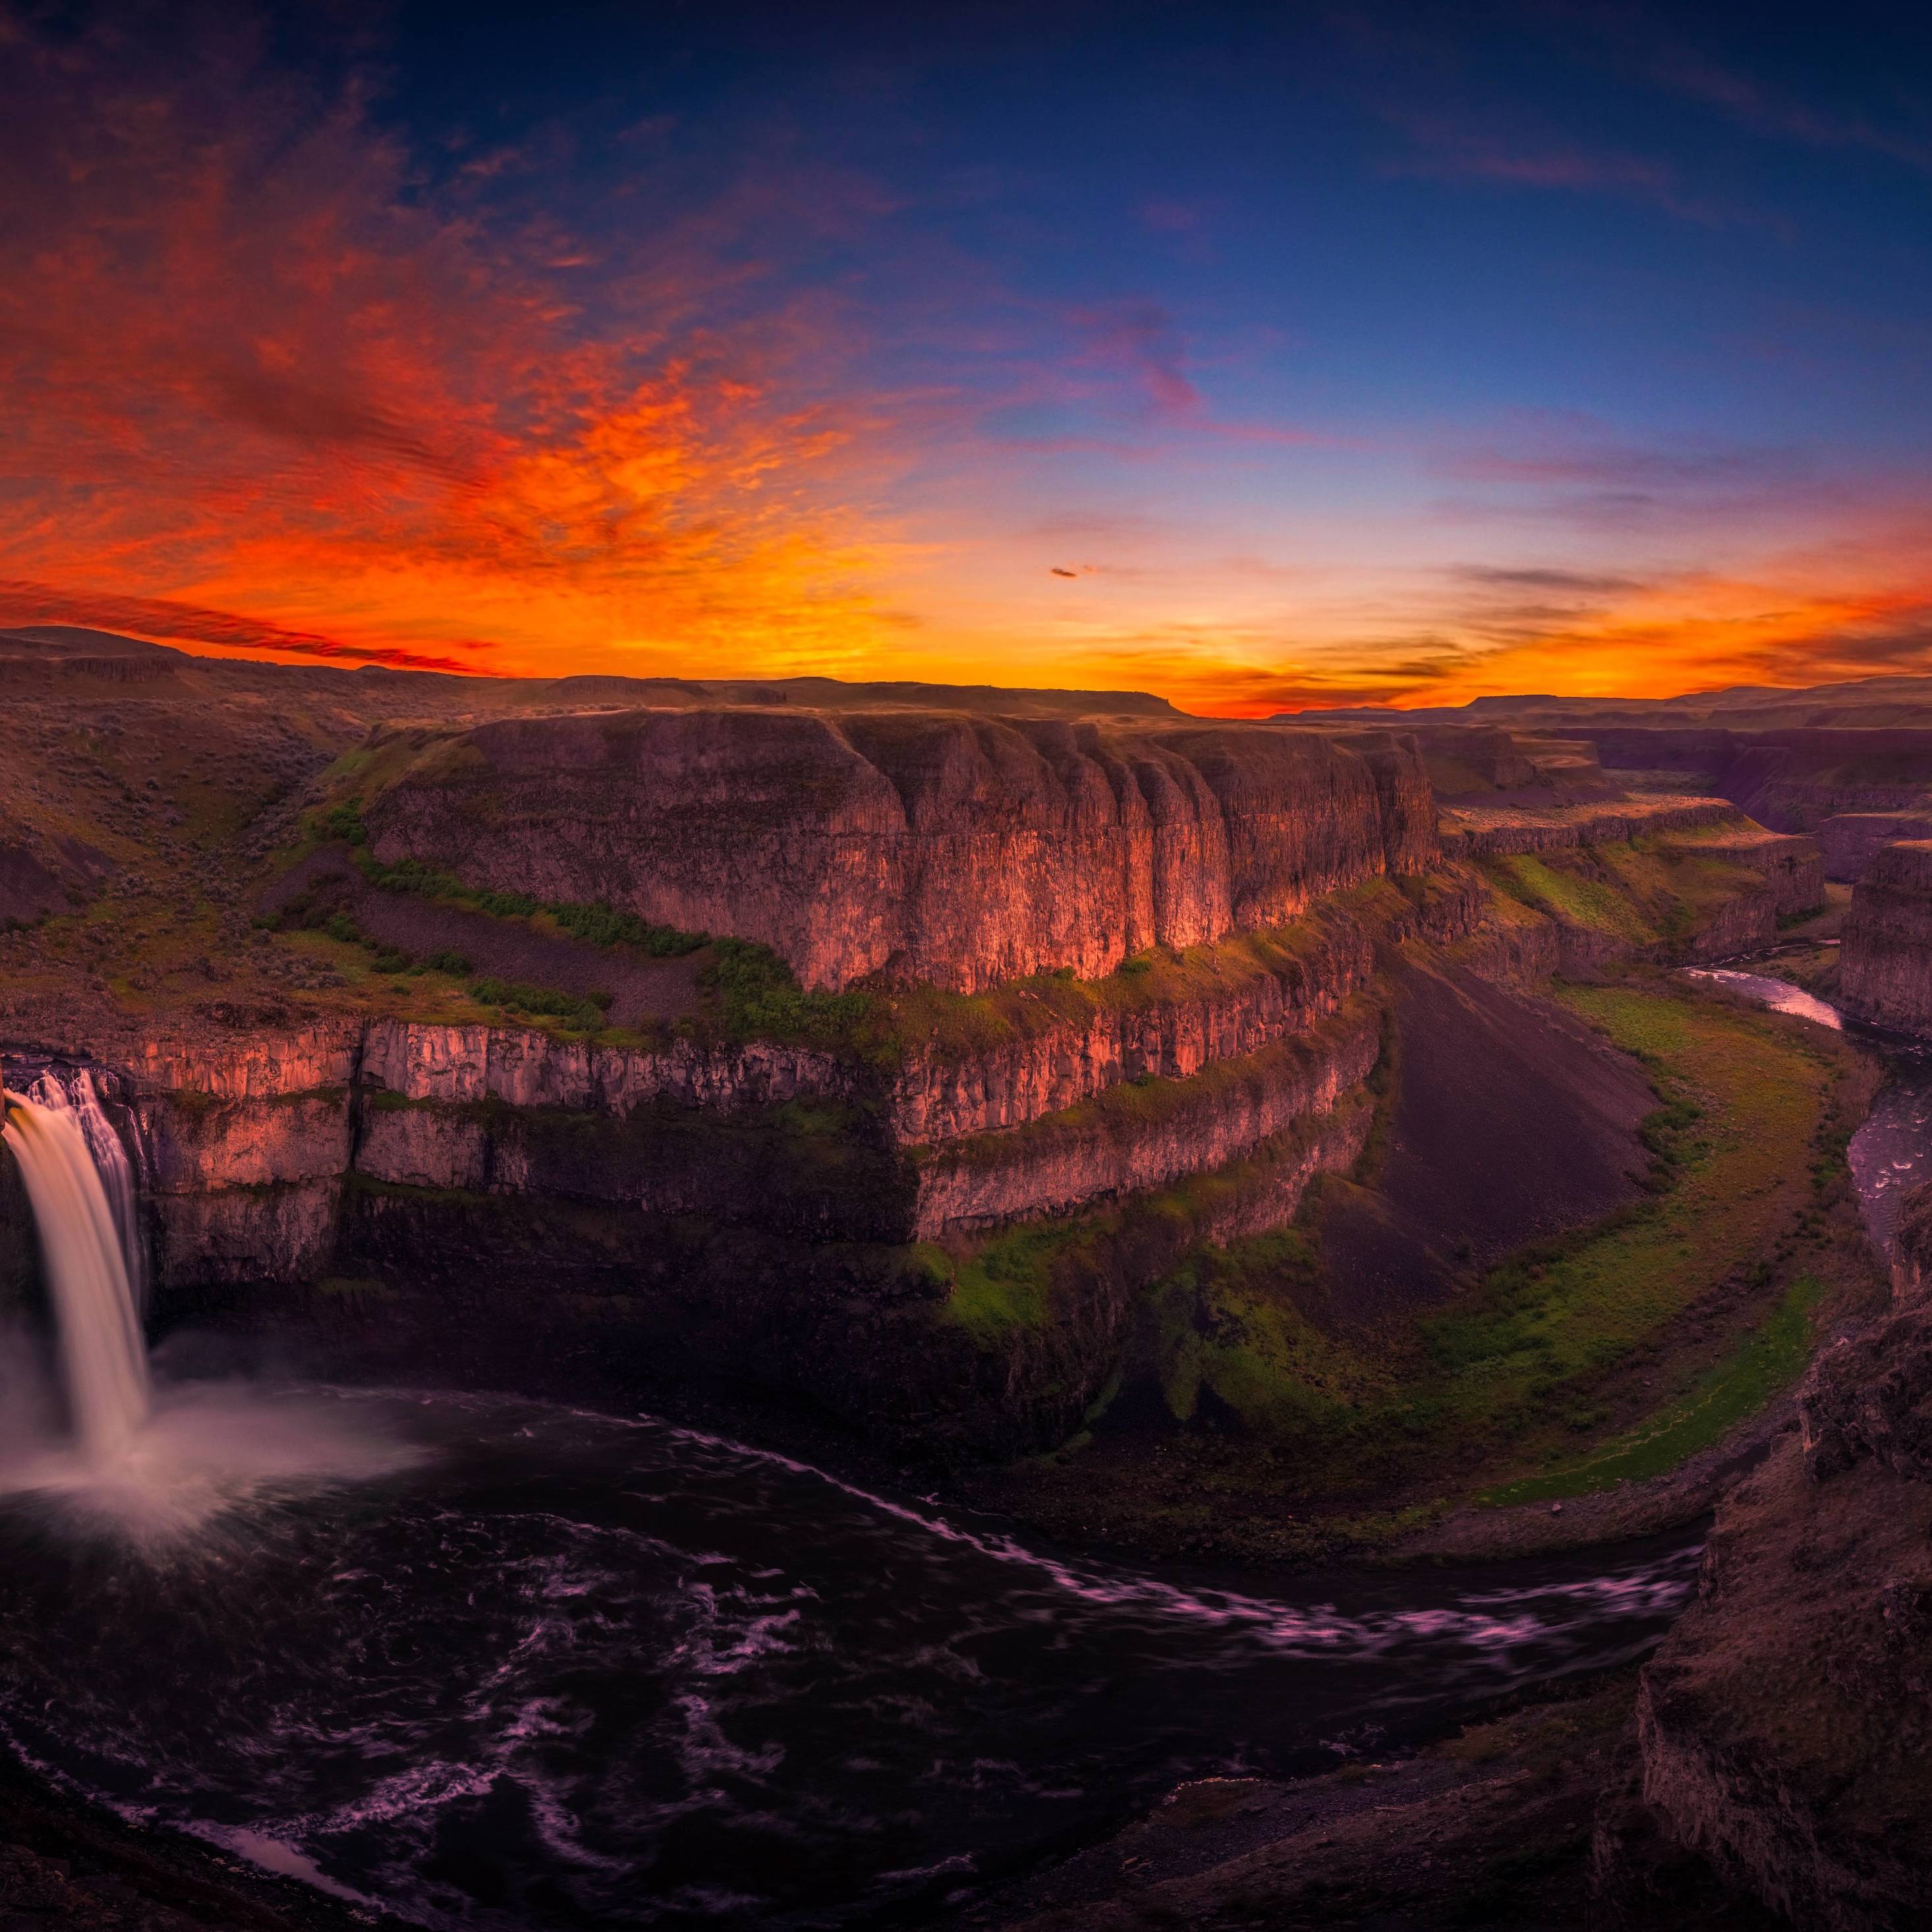 Waterfall Sunset Background Wallpaper